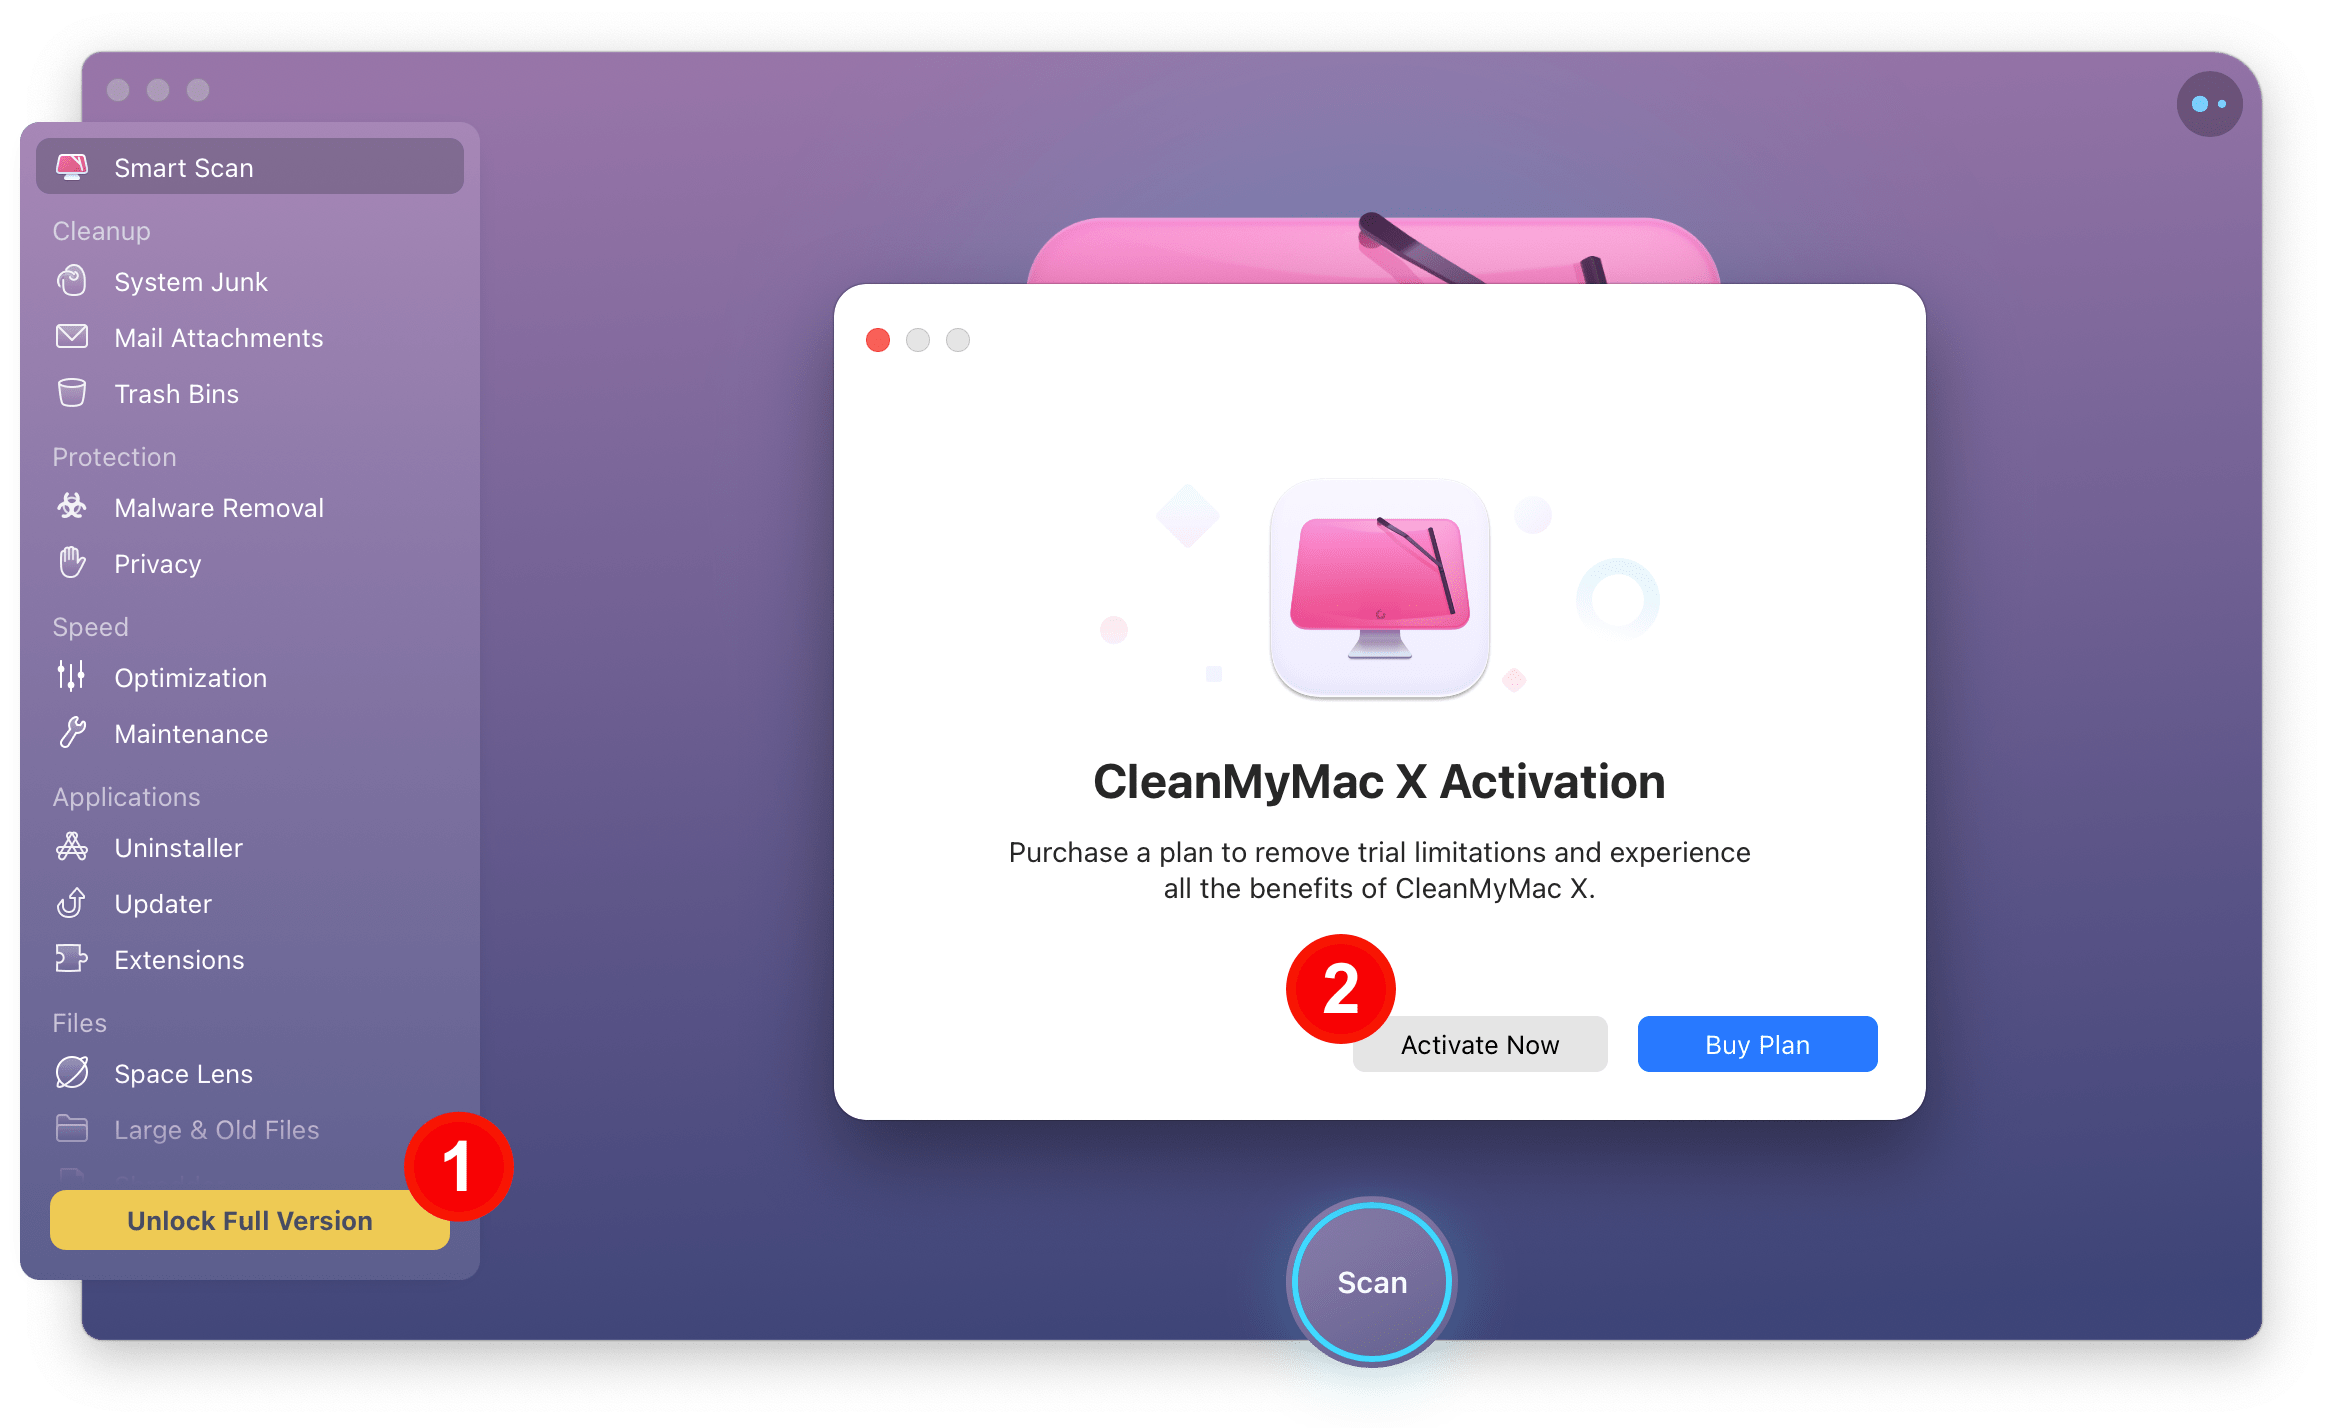 download clean my mac 3